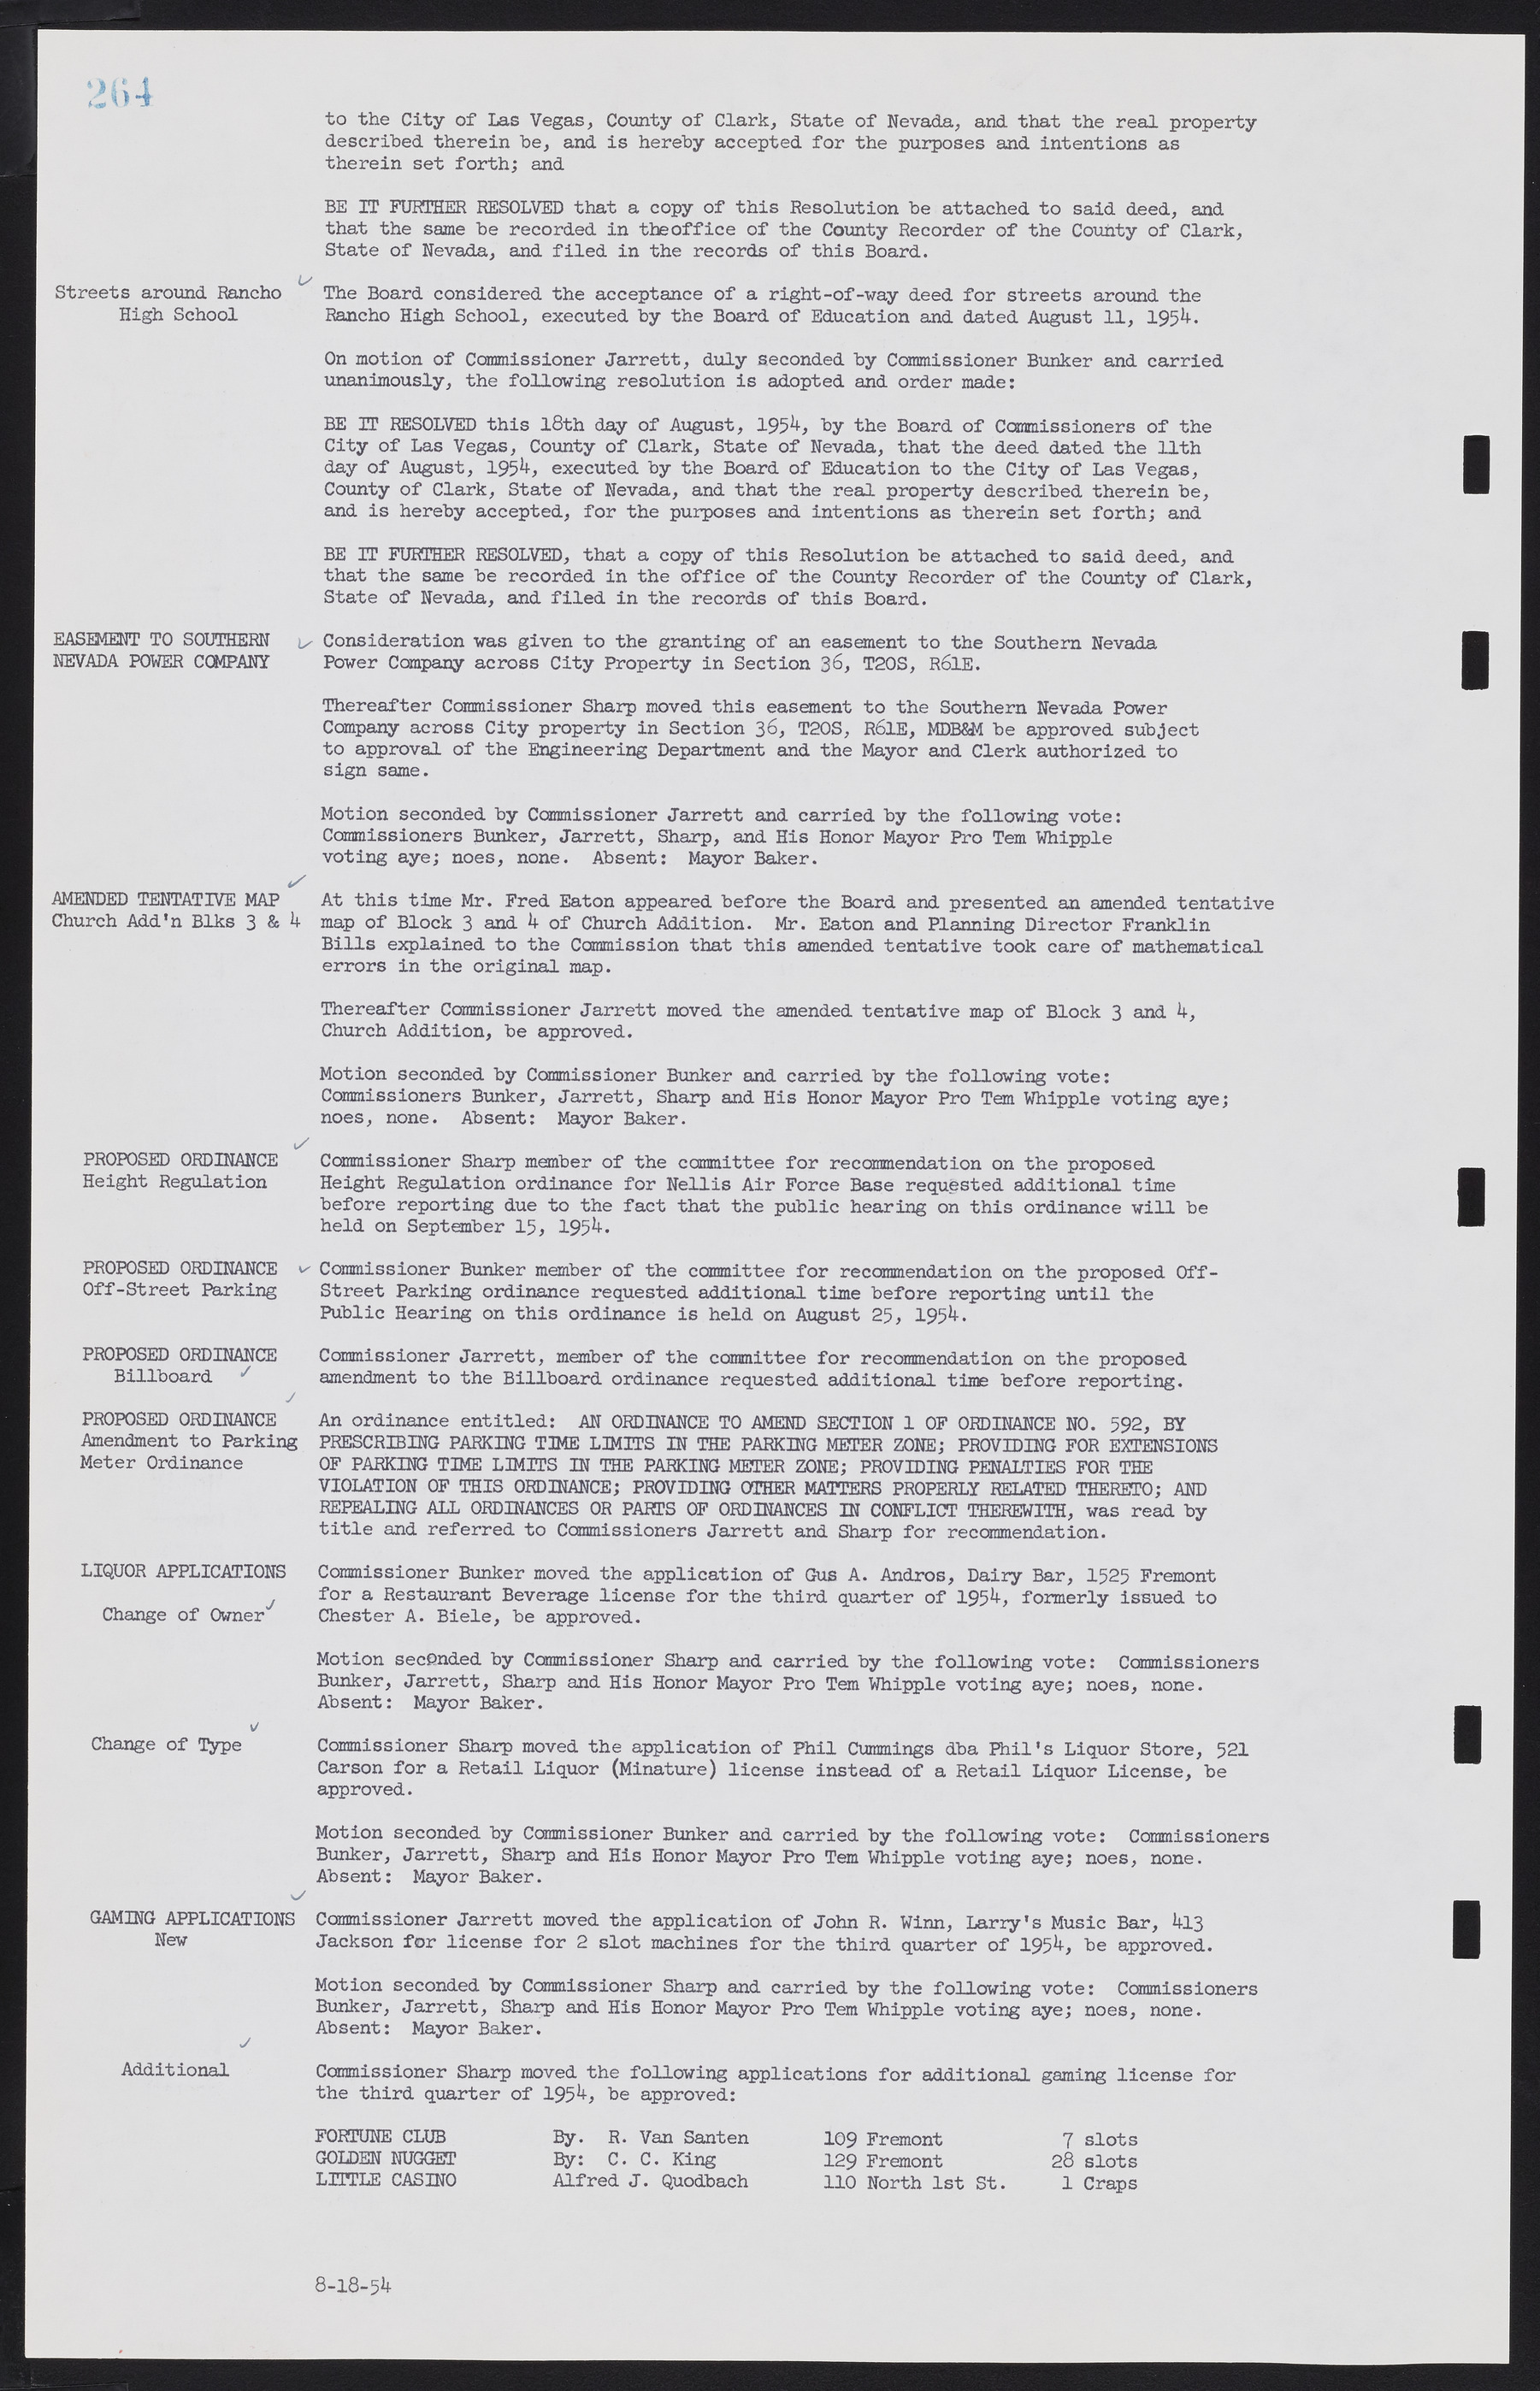 Las Vegas City Commission Minutes, February 17, 1954 to September 21, 1955, lvc000009-270